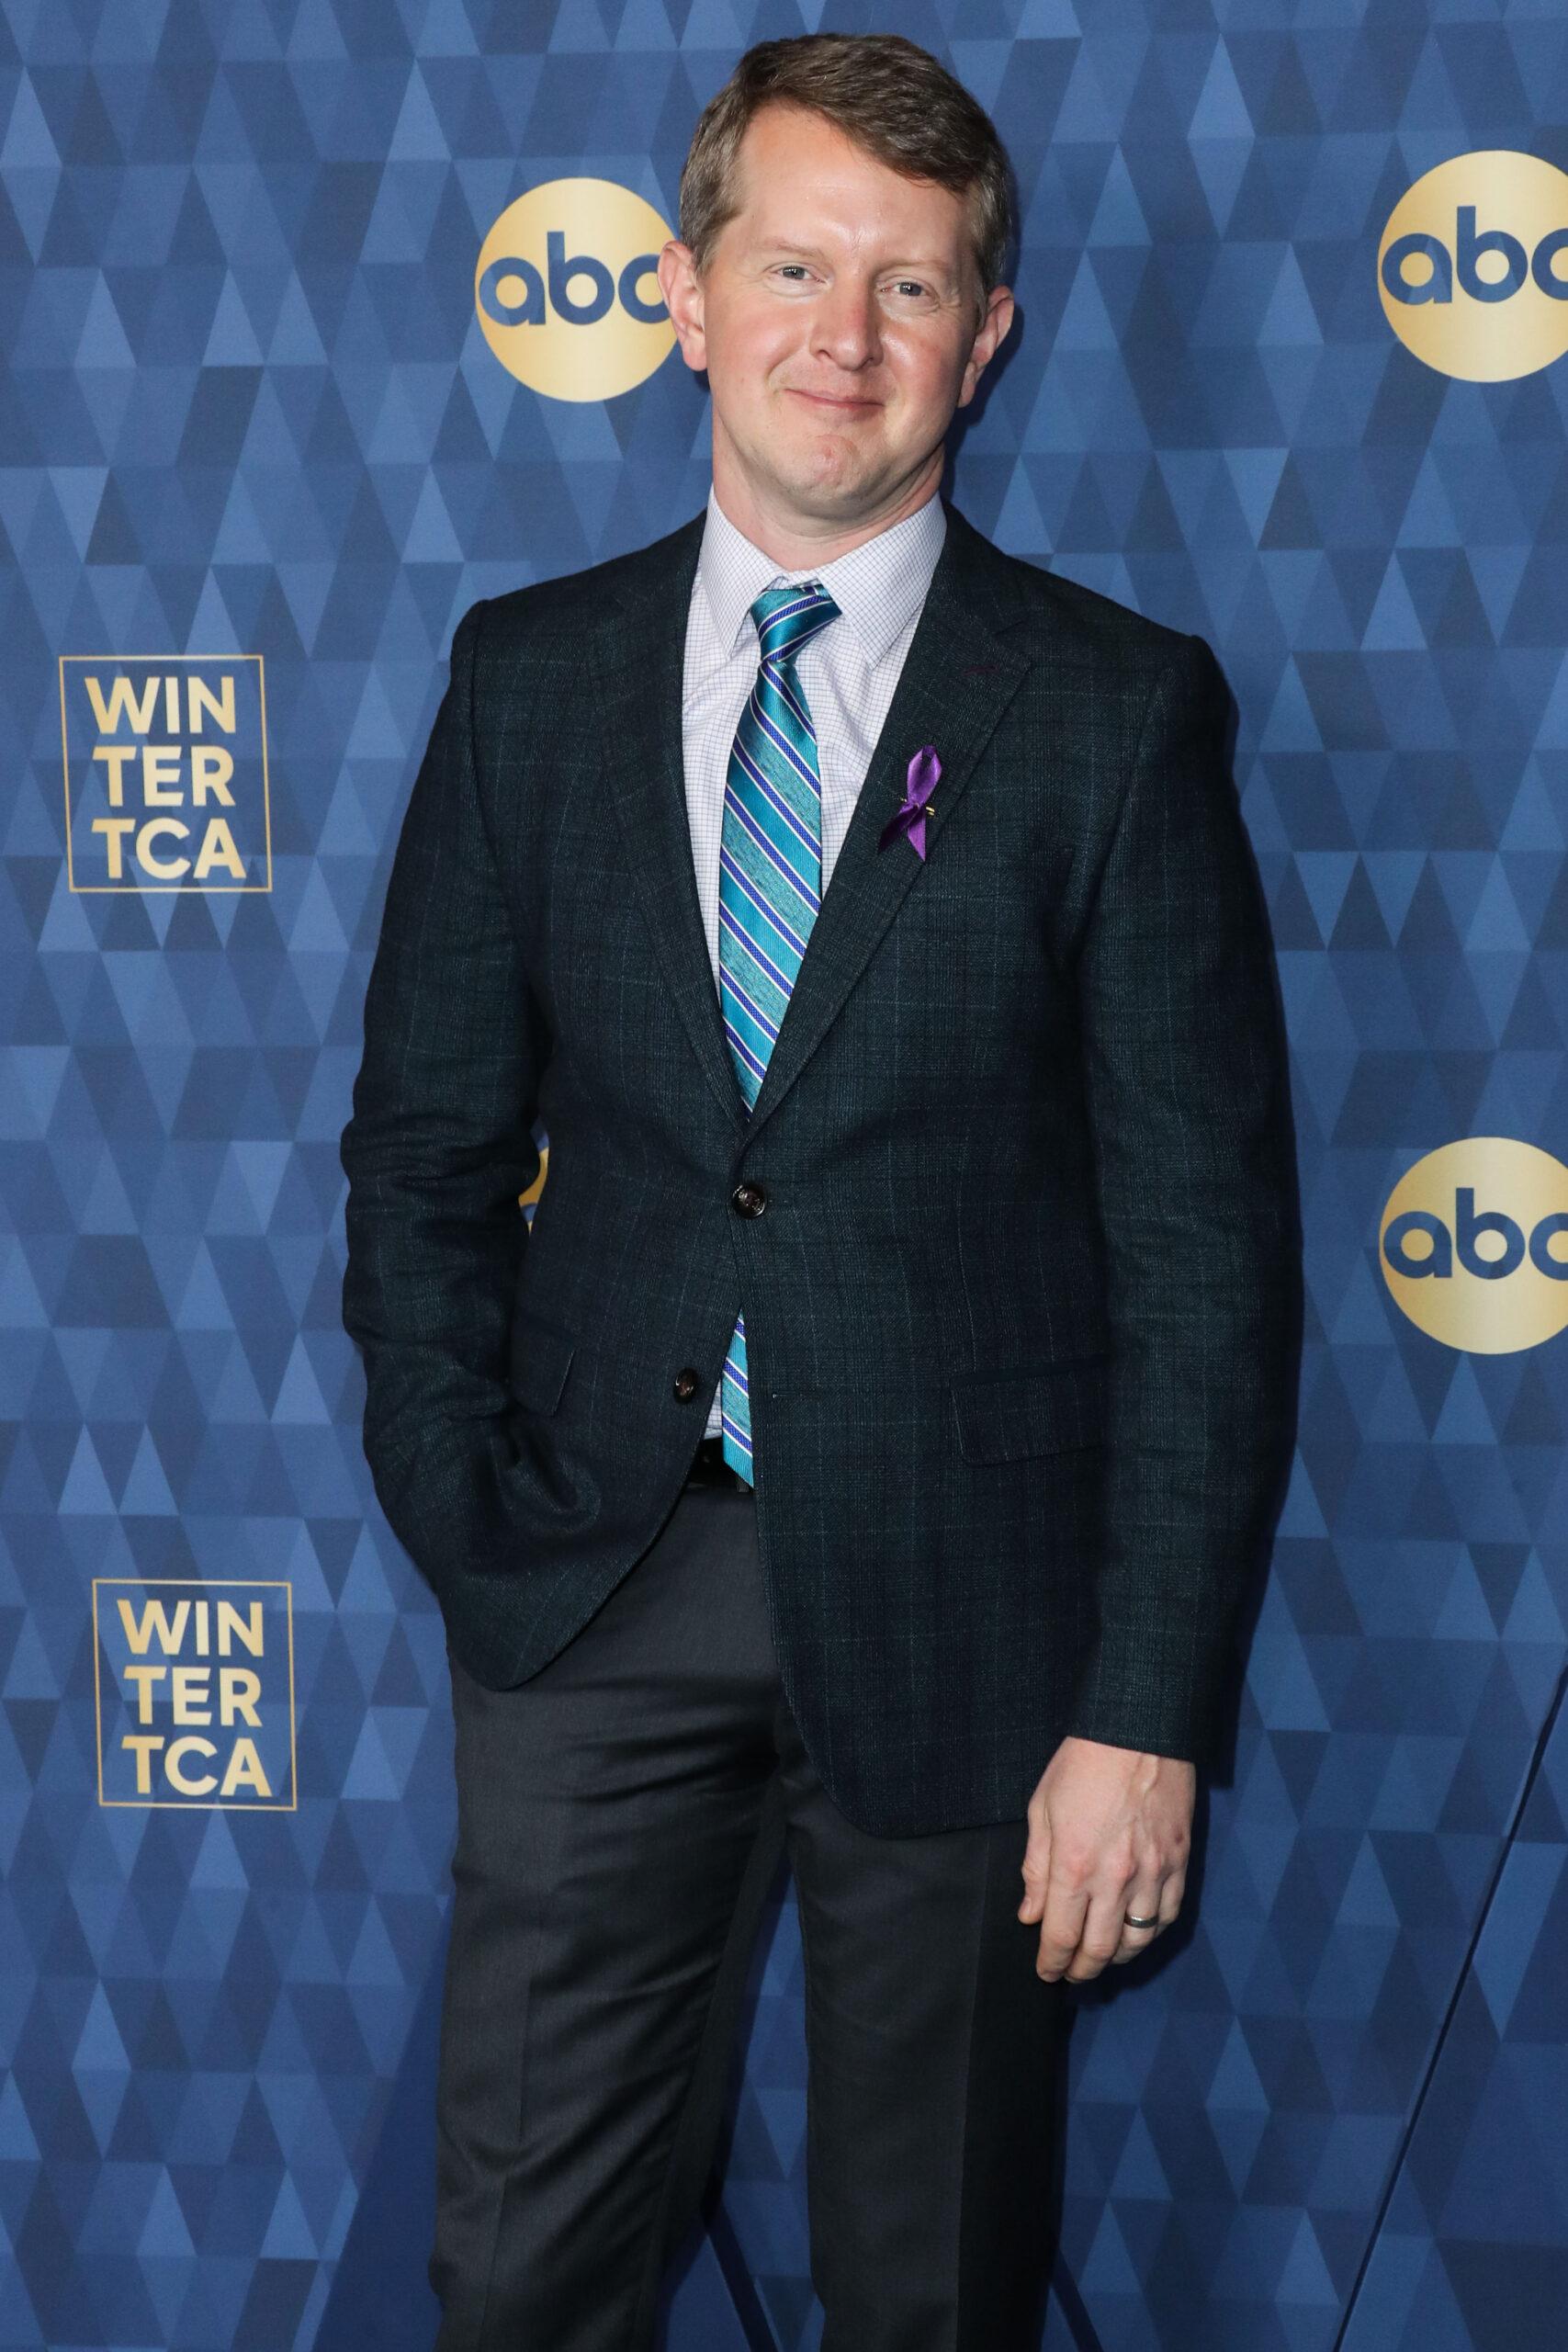 Ken Jennings at ABC Television's TCA Winter Press Tour 2020